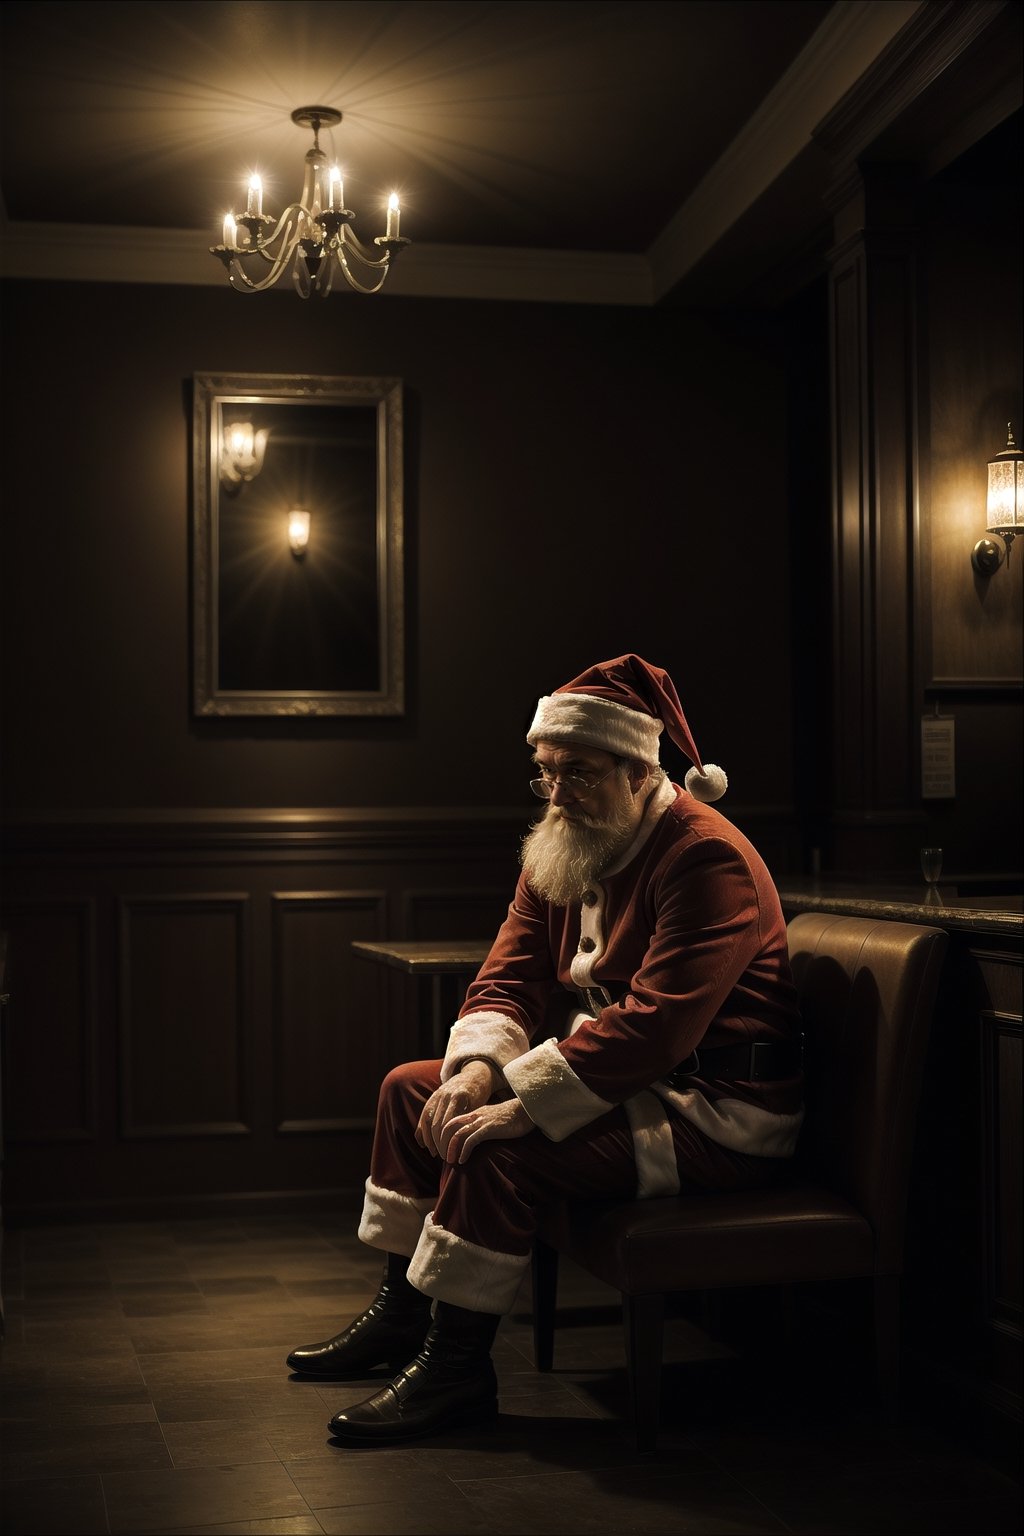 Masterpiece,ultra detail, a sad santa Chris sit in empty bar, drinking hot wine, dark atmosphere , low key, 